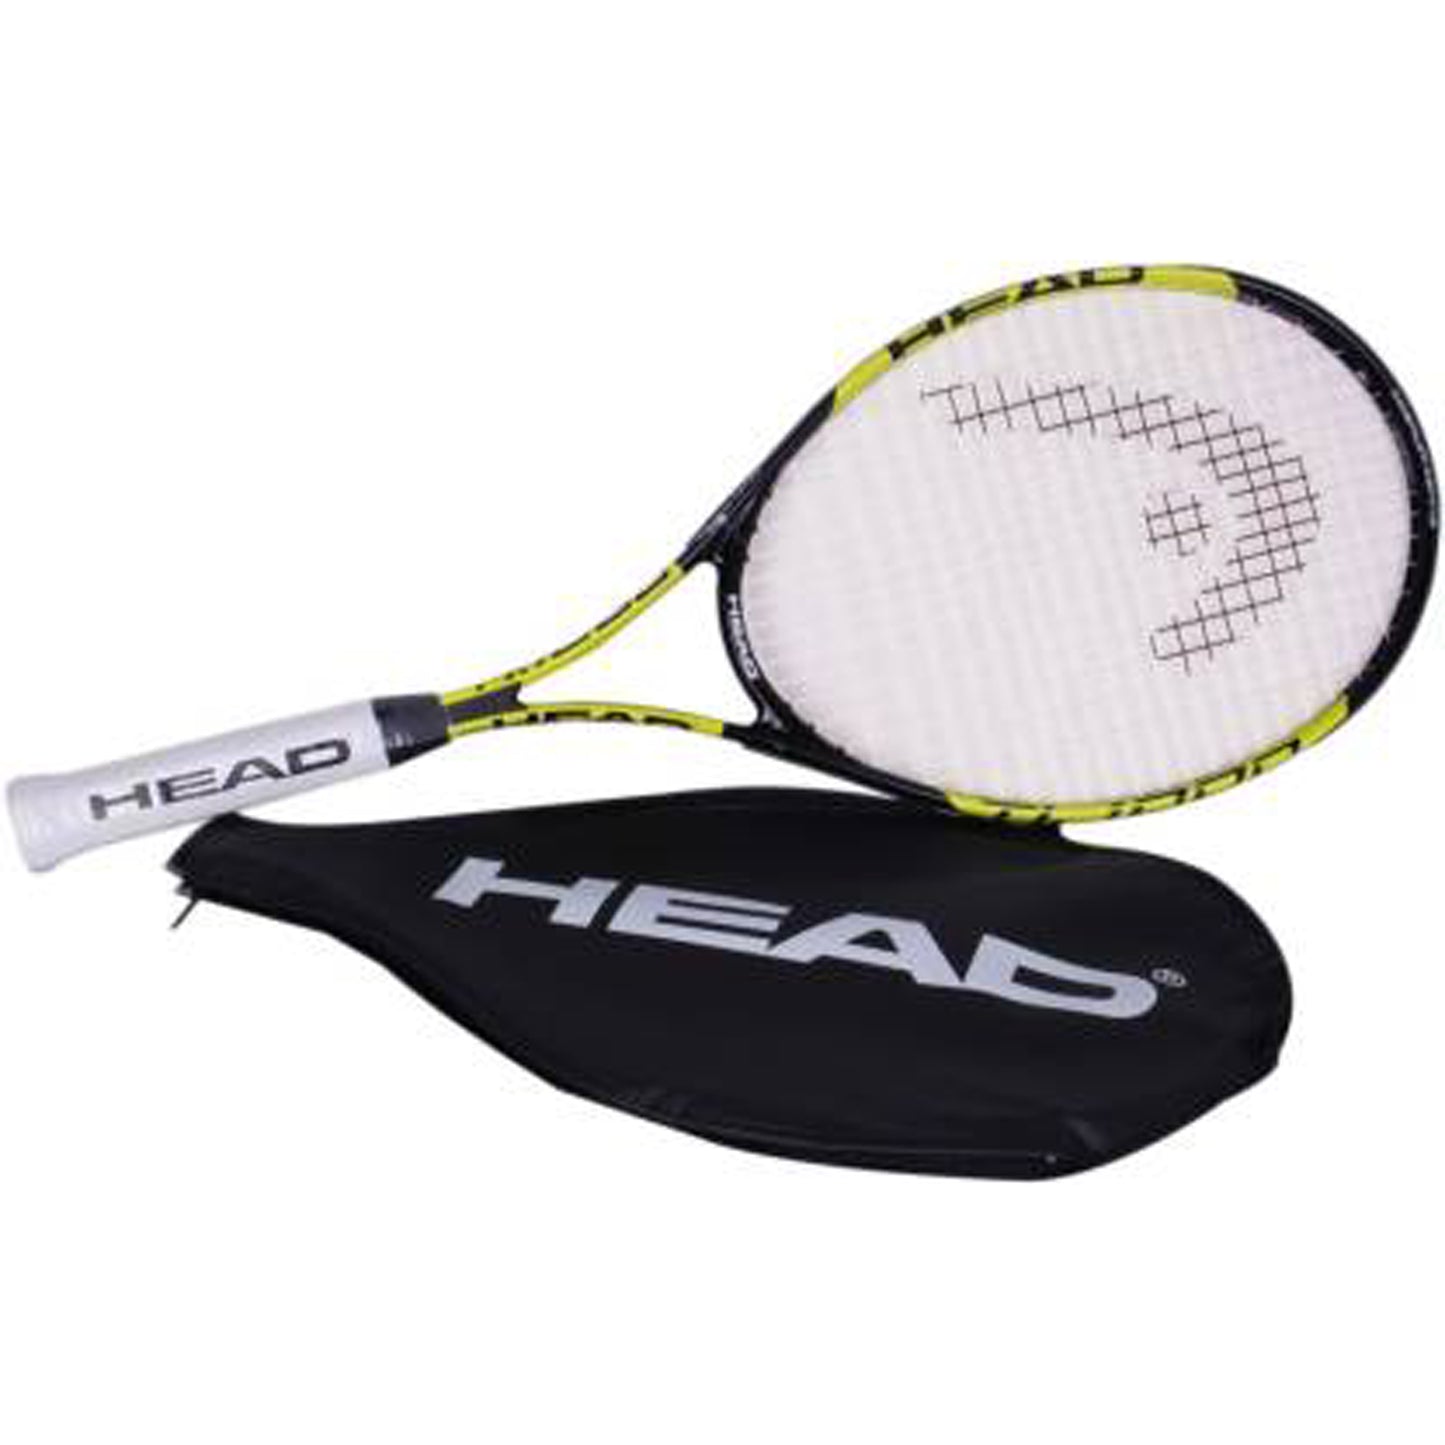 Head Titanium 1000 Strung Titanium Tennis Racquet - Black/Yellow - Best Price online Prokicksports.com